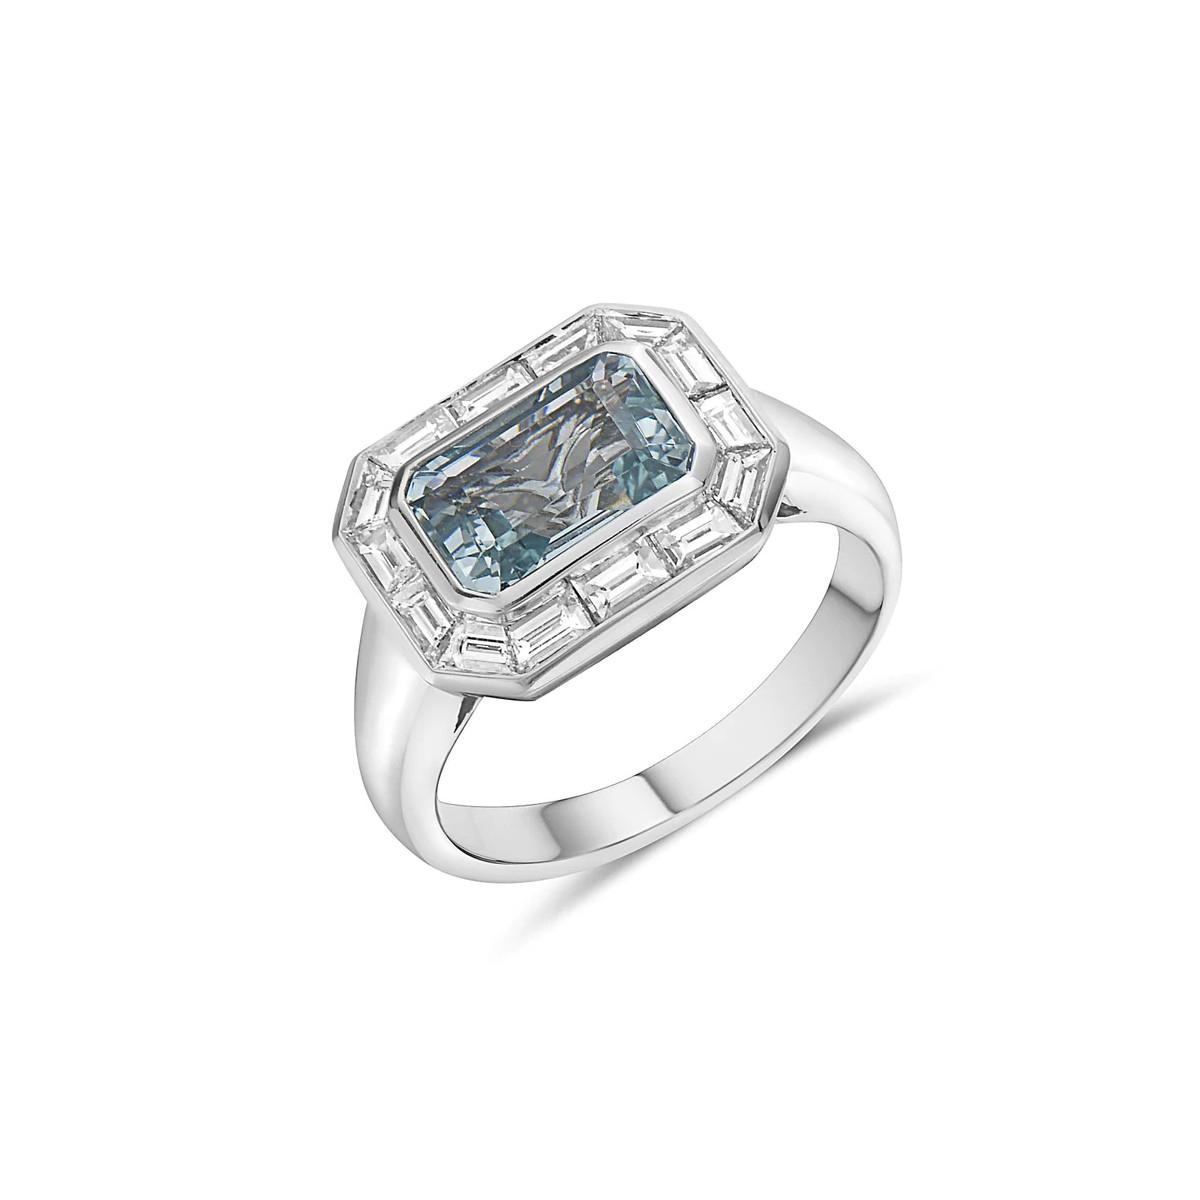 Charles Krypell Emerald Cut Aquamarine and Diamond Ring